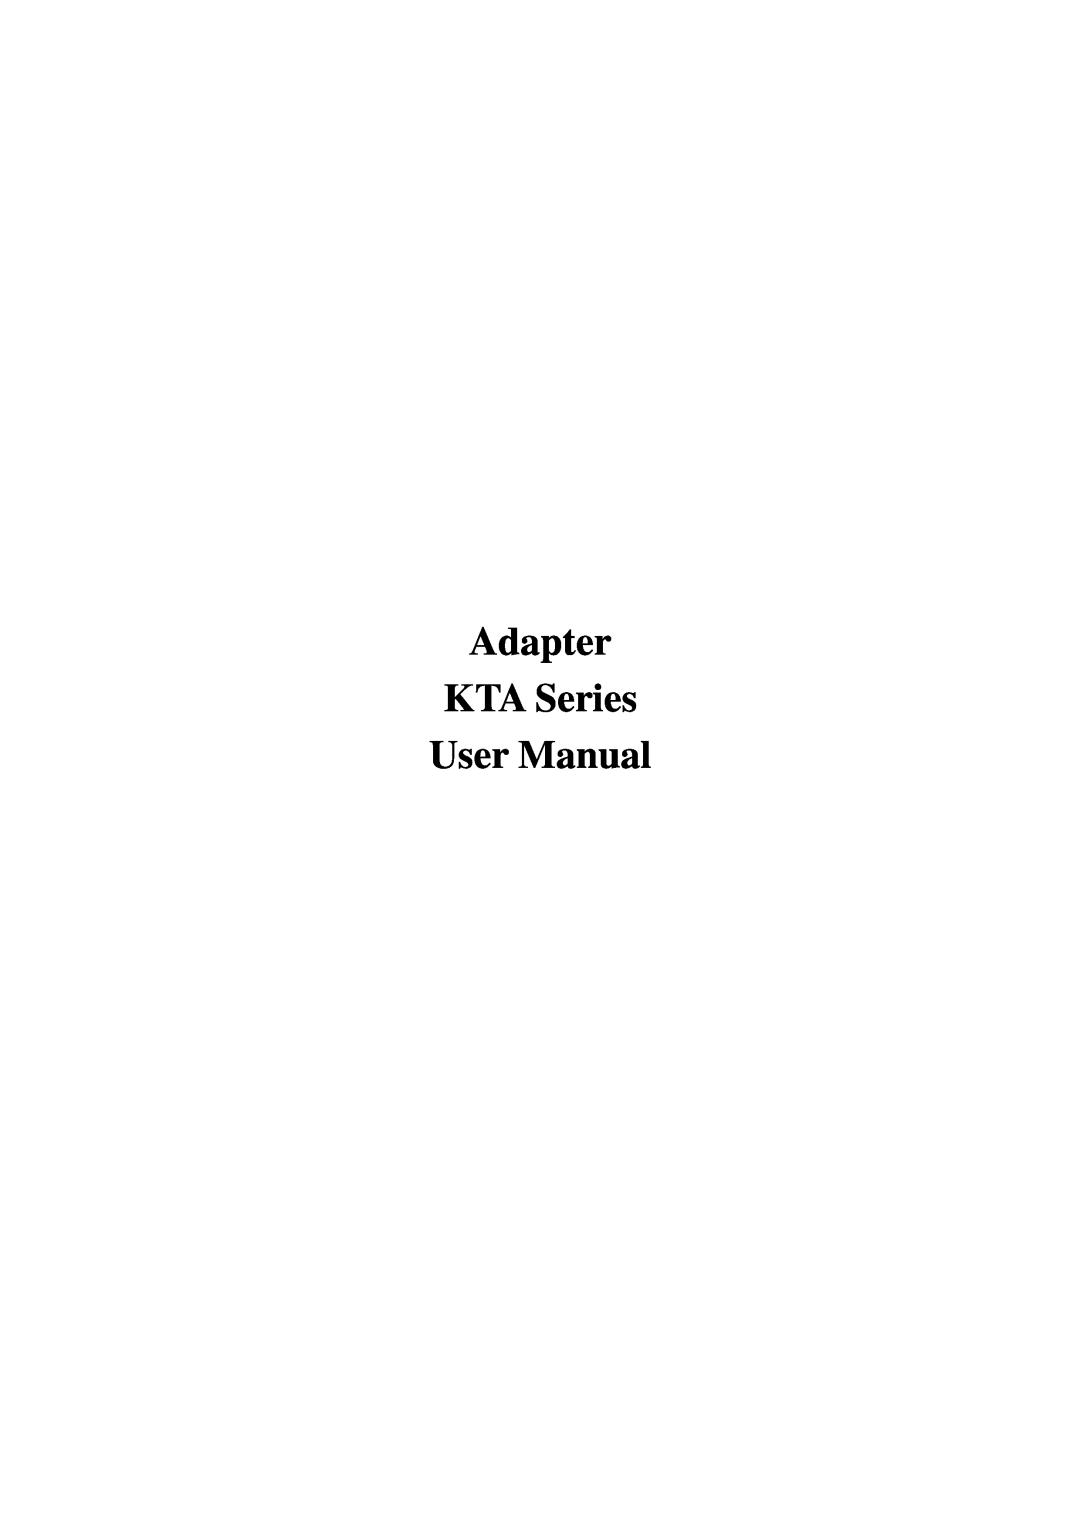 Carrier Access user manual Adapter KTA Series User Manual 